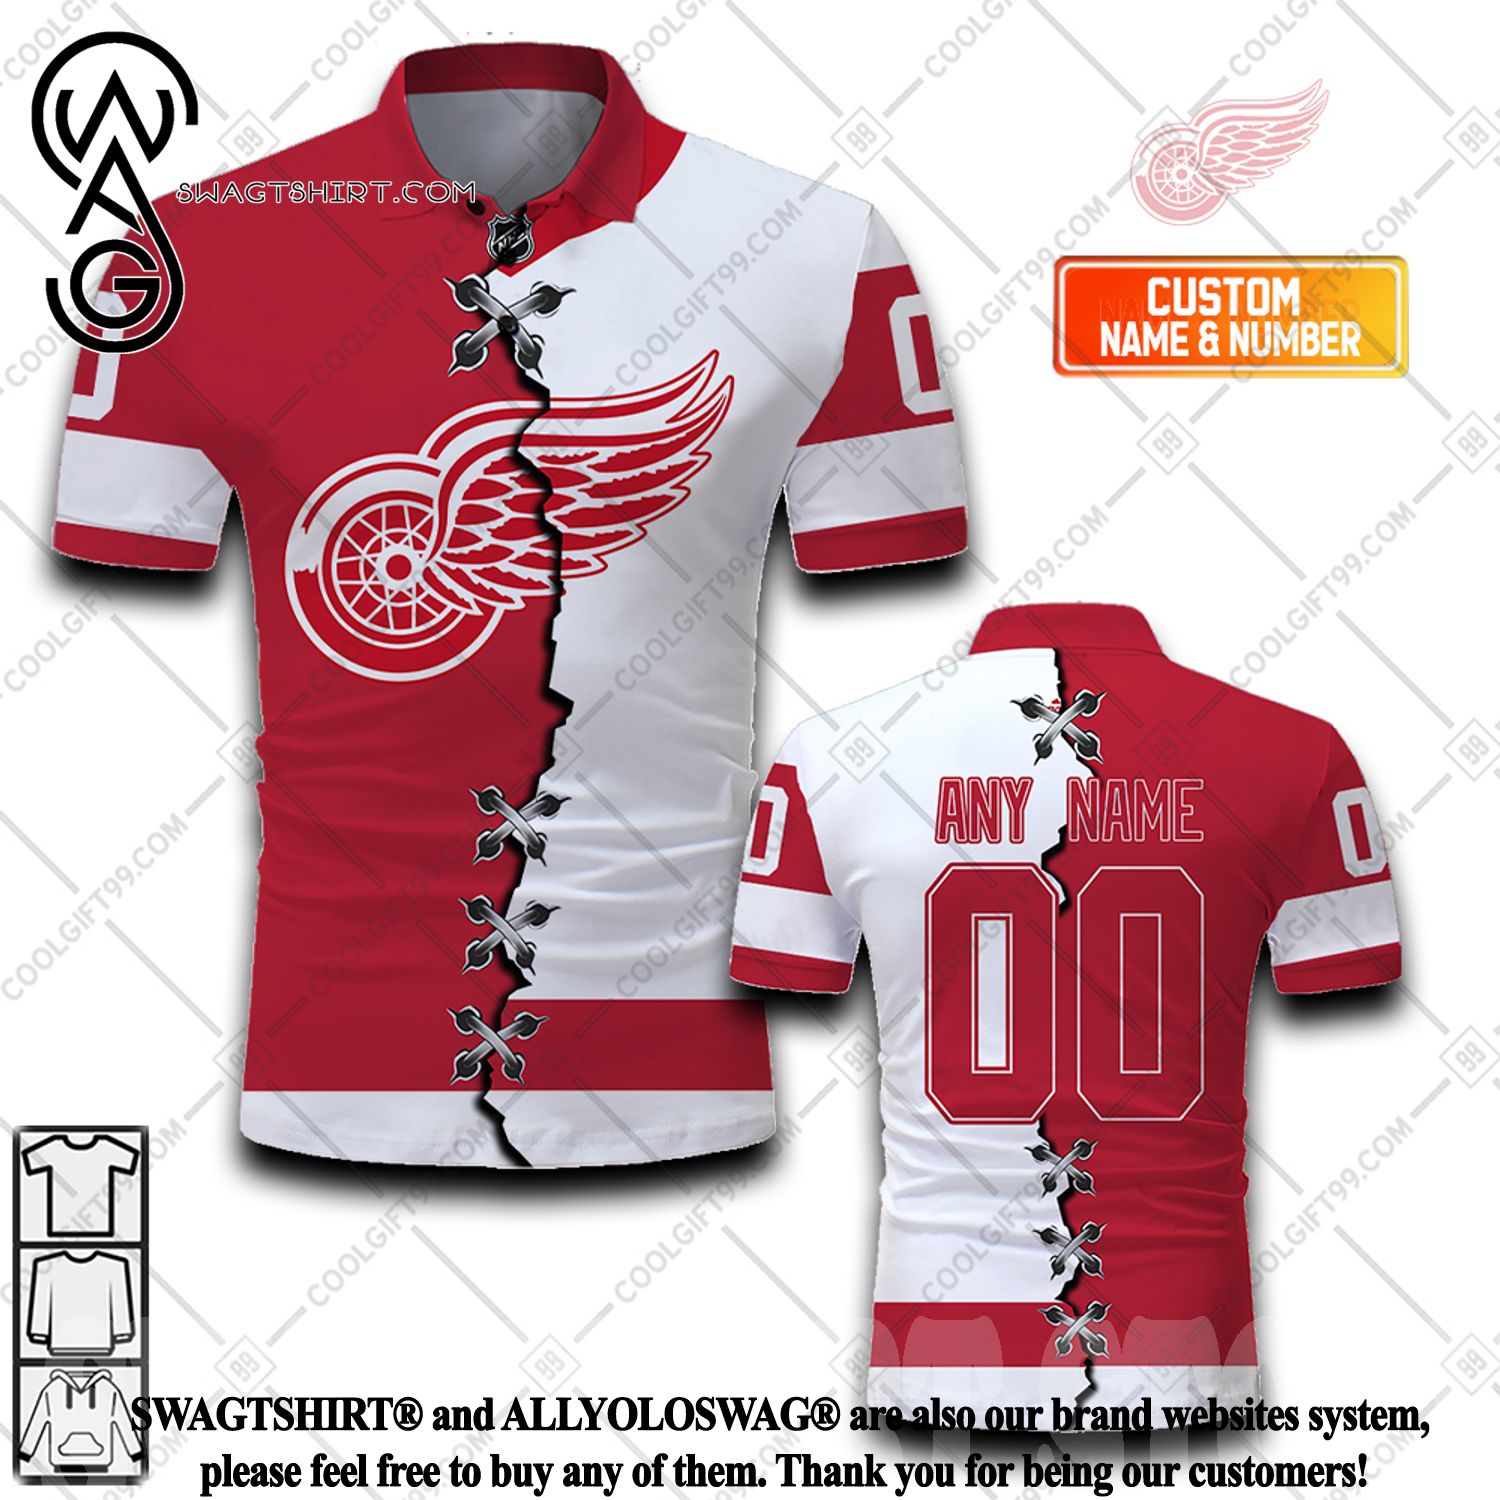 Spirit of Detroit wearing its very own Detroit RedWings Hockey jersey.